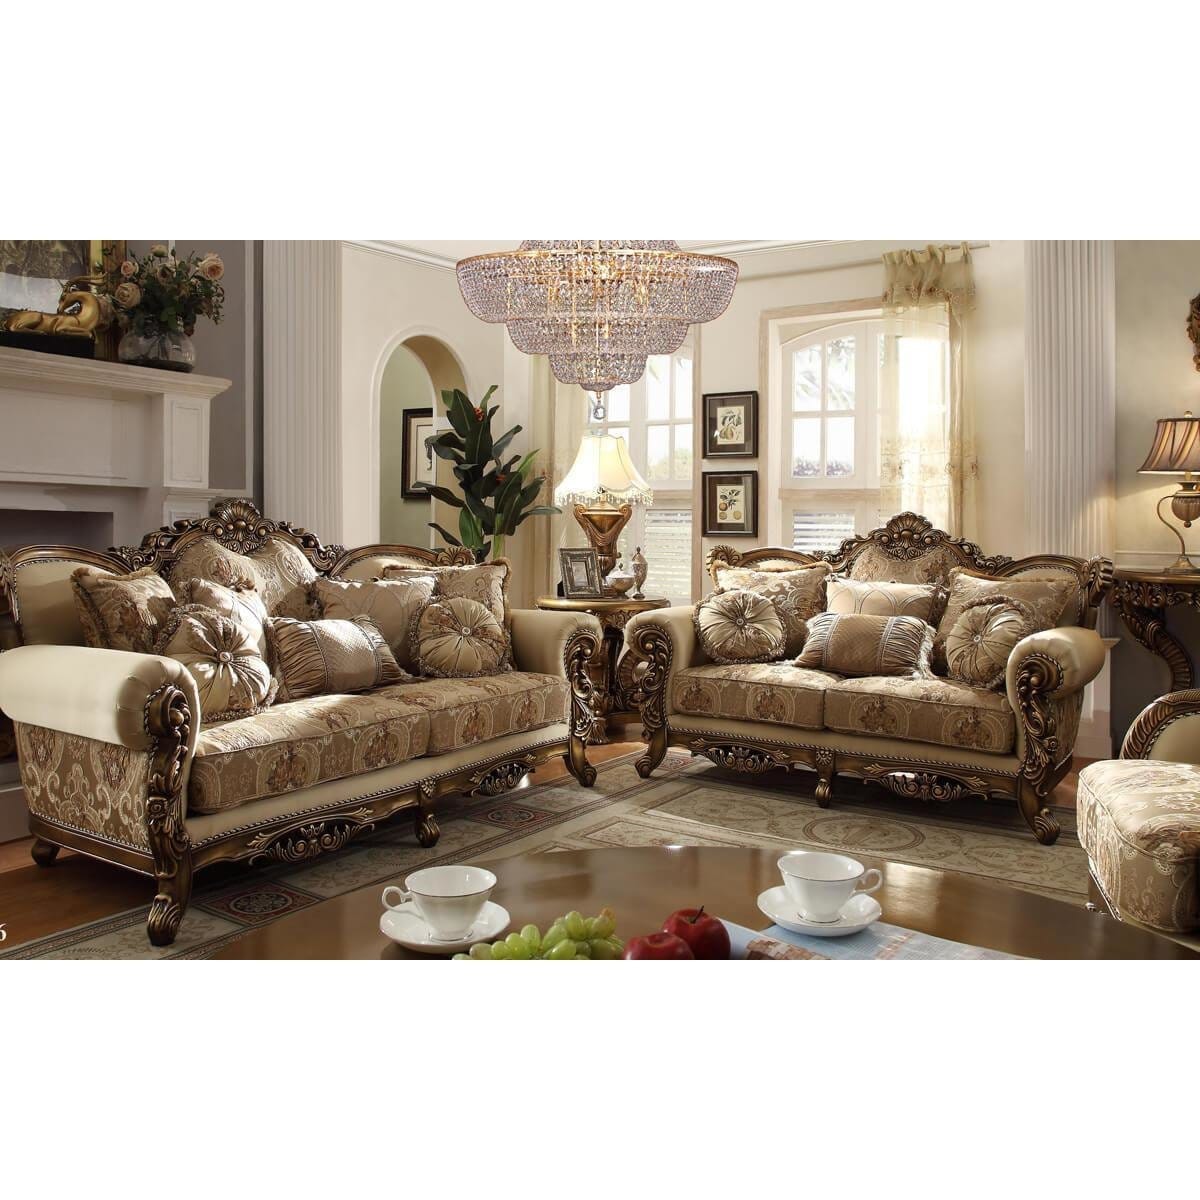 Homey Design 3Pc Sofa Set HD-506-SSET3